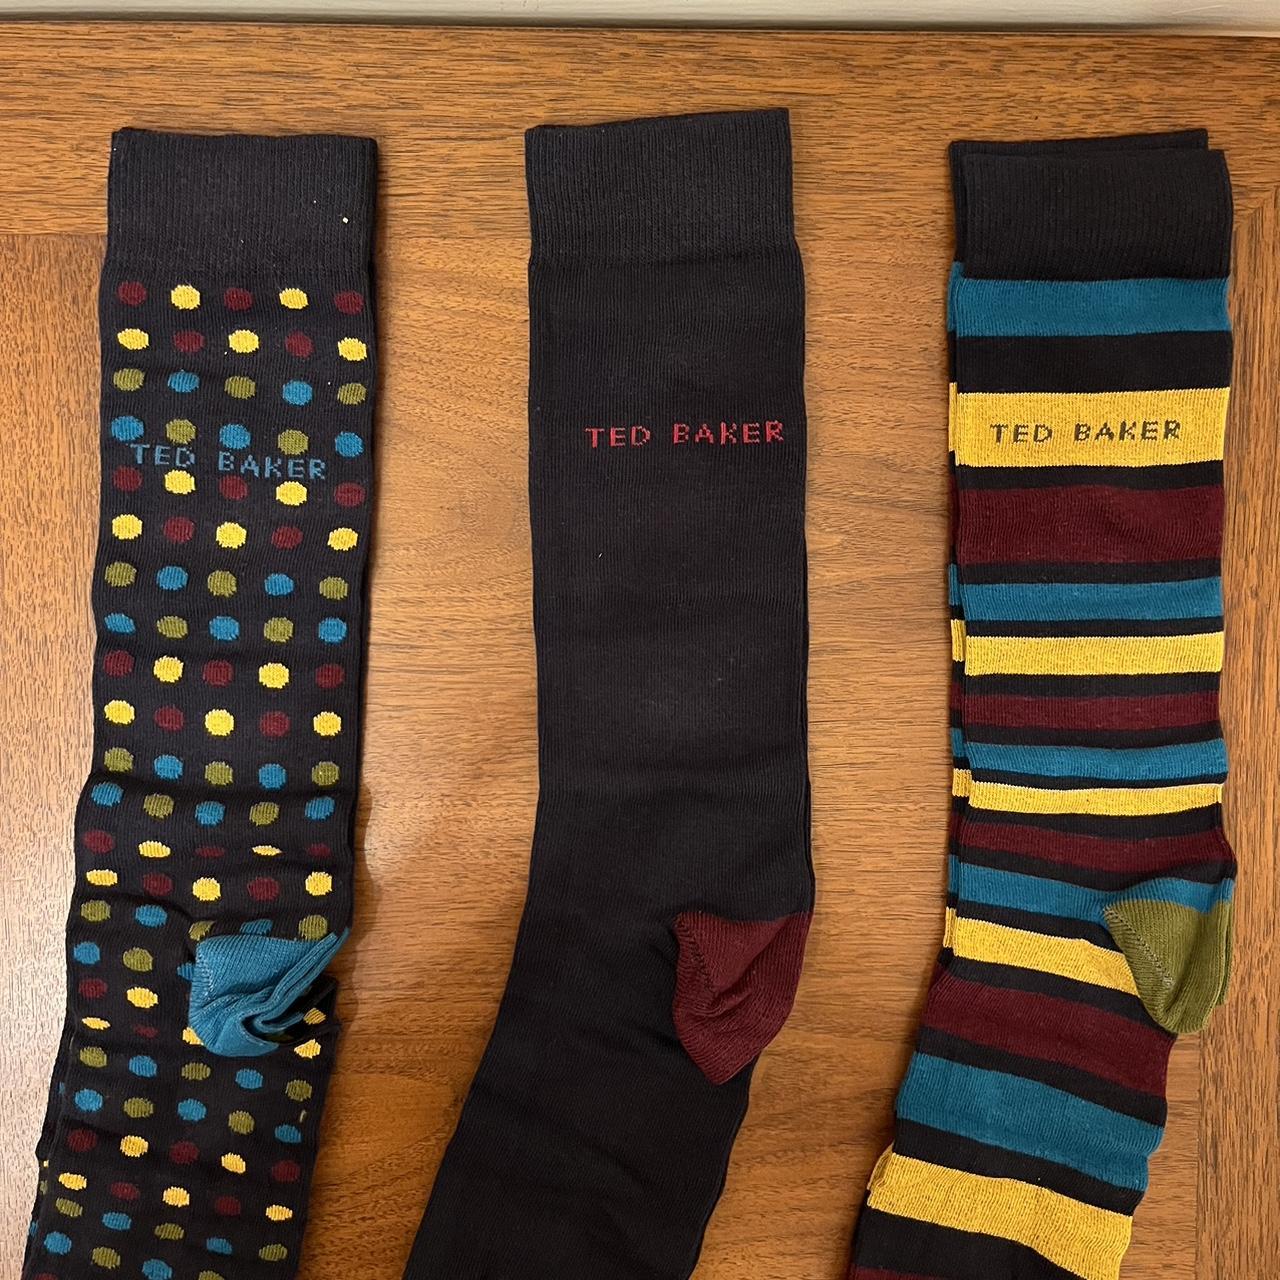 Pack of 3 Ted Baker socks. Never worn, fresh as a